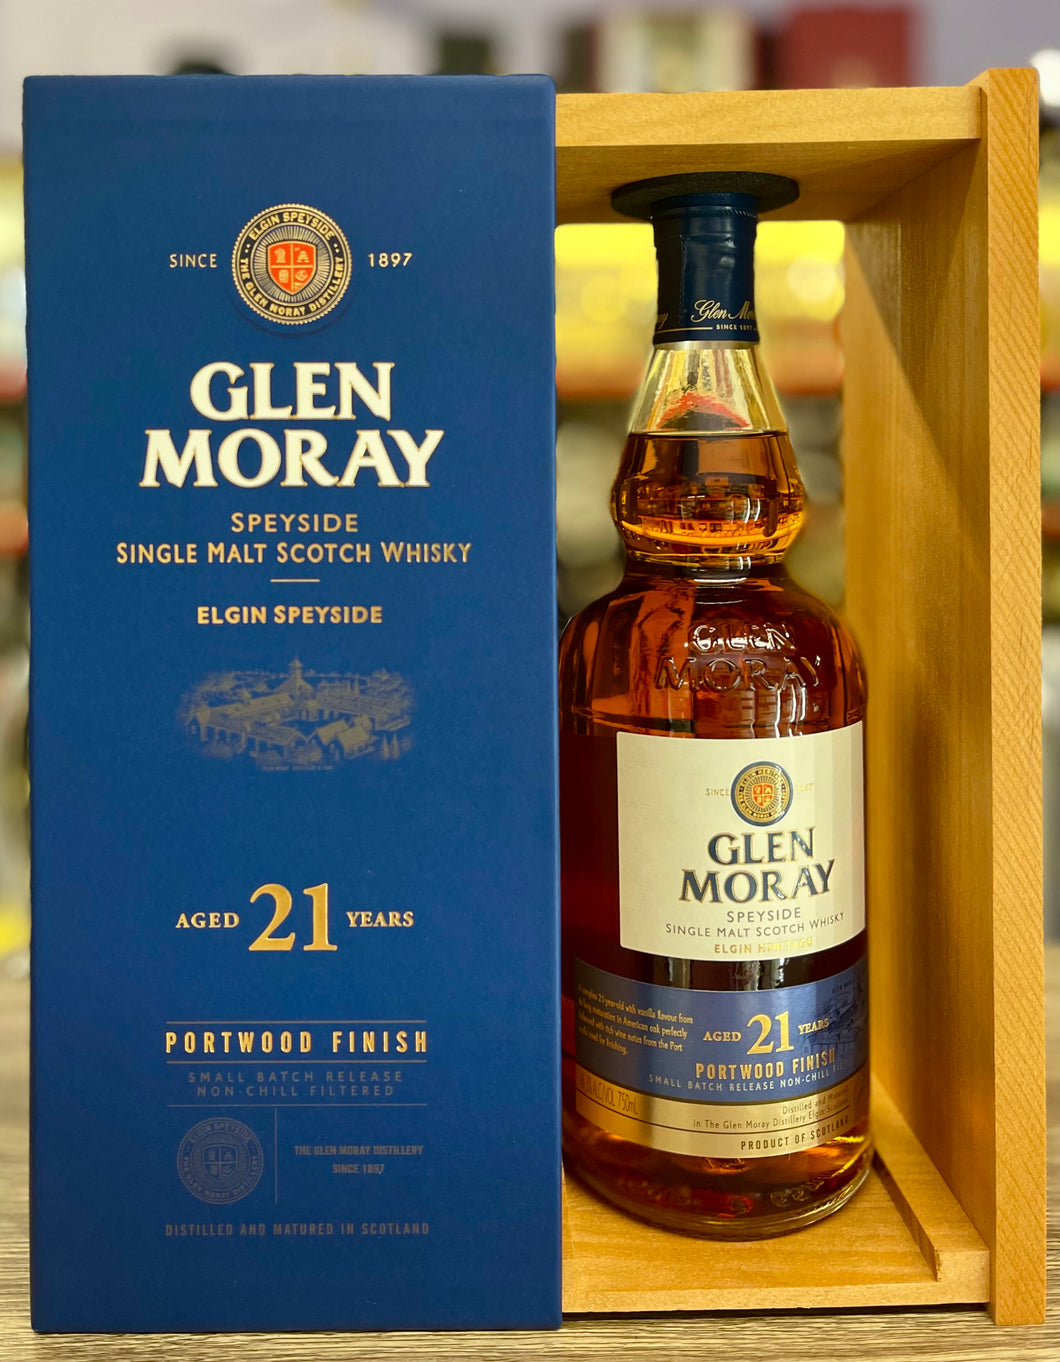 Glen Moray Elgin Heritage Portwood Finish 21 Year Old Single Malt Scotch